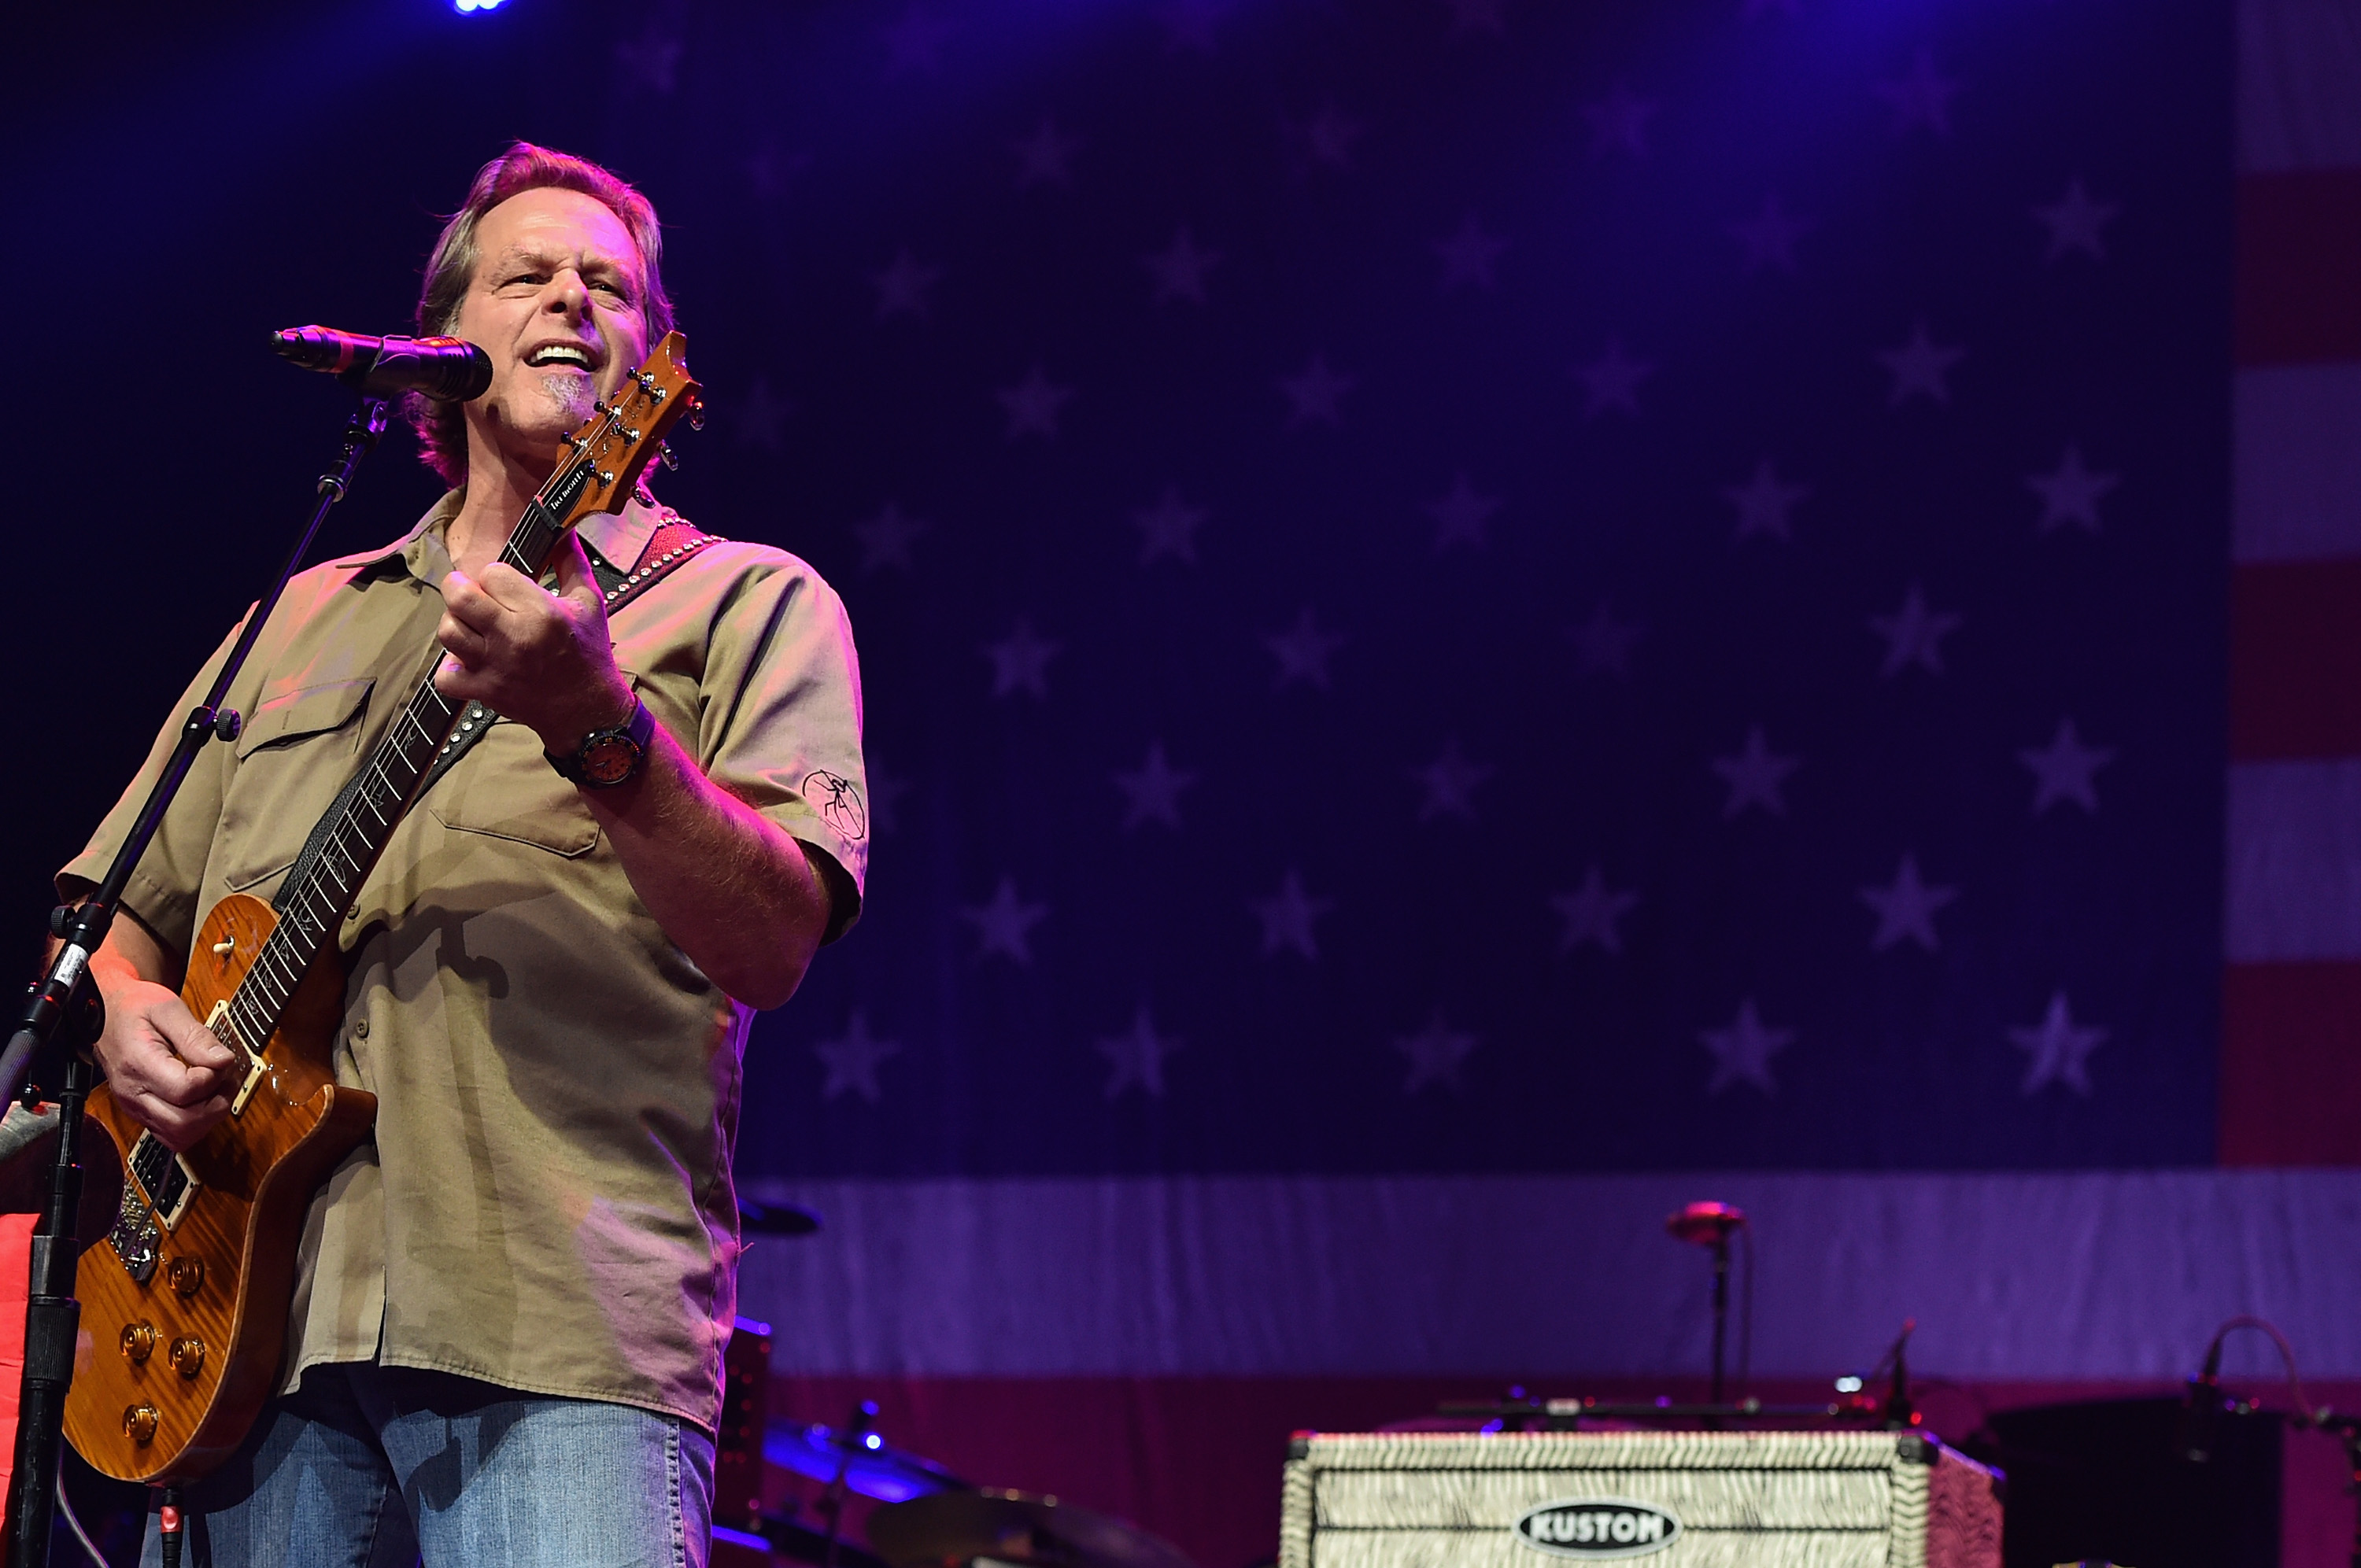 Ted Nugent performs at Charlie Daniels' 2015 Volunteer Jam at Bridgestone Arena on August 12, 2015 in Nashville, Tennessee. (John Shearer&mdash;Getty Images)